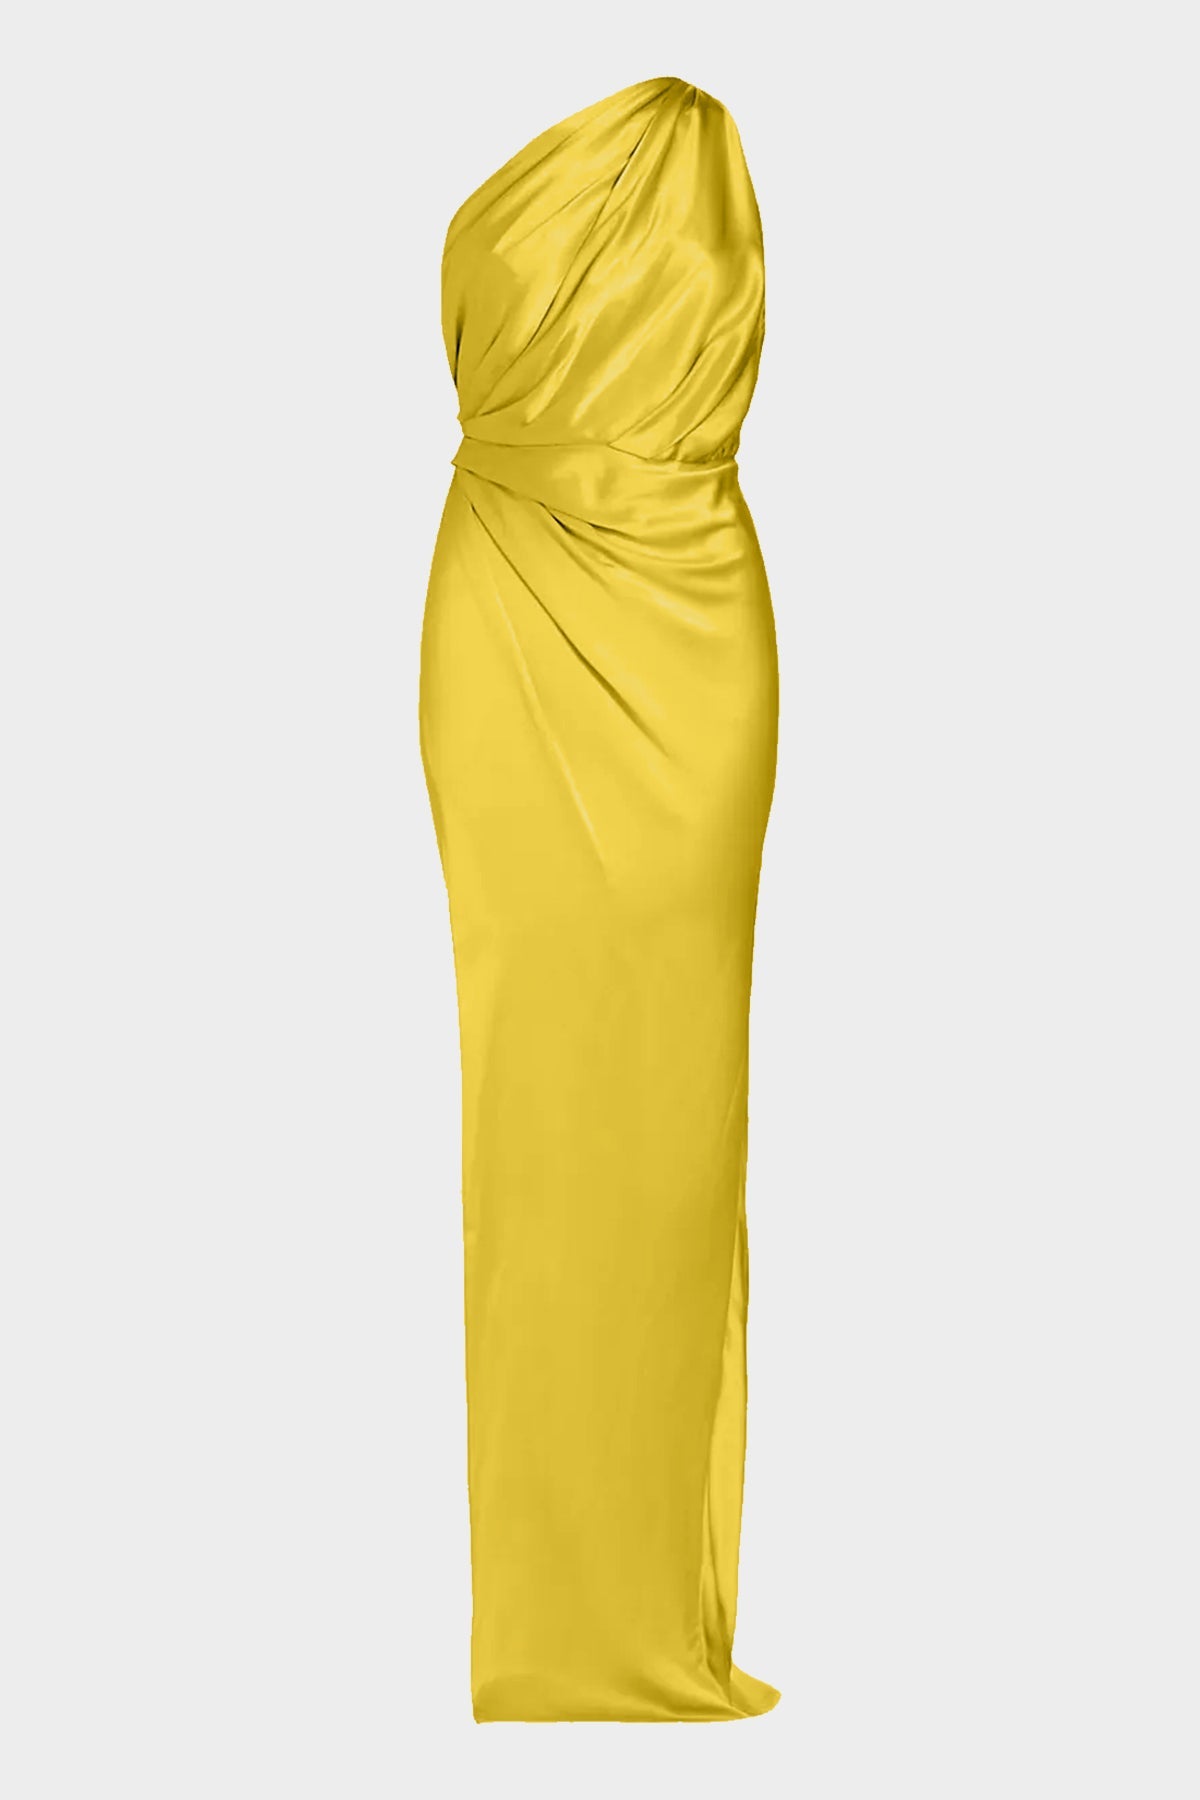 Asymmetrical Drape Gown in Dijon - shop-olivia.com